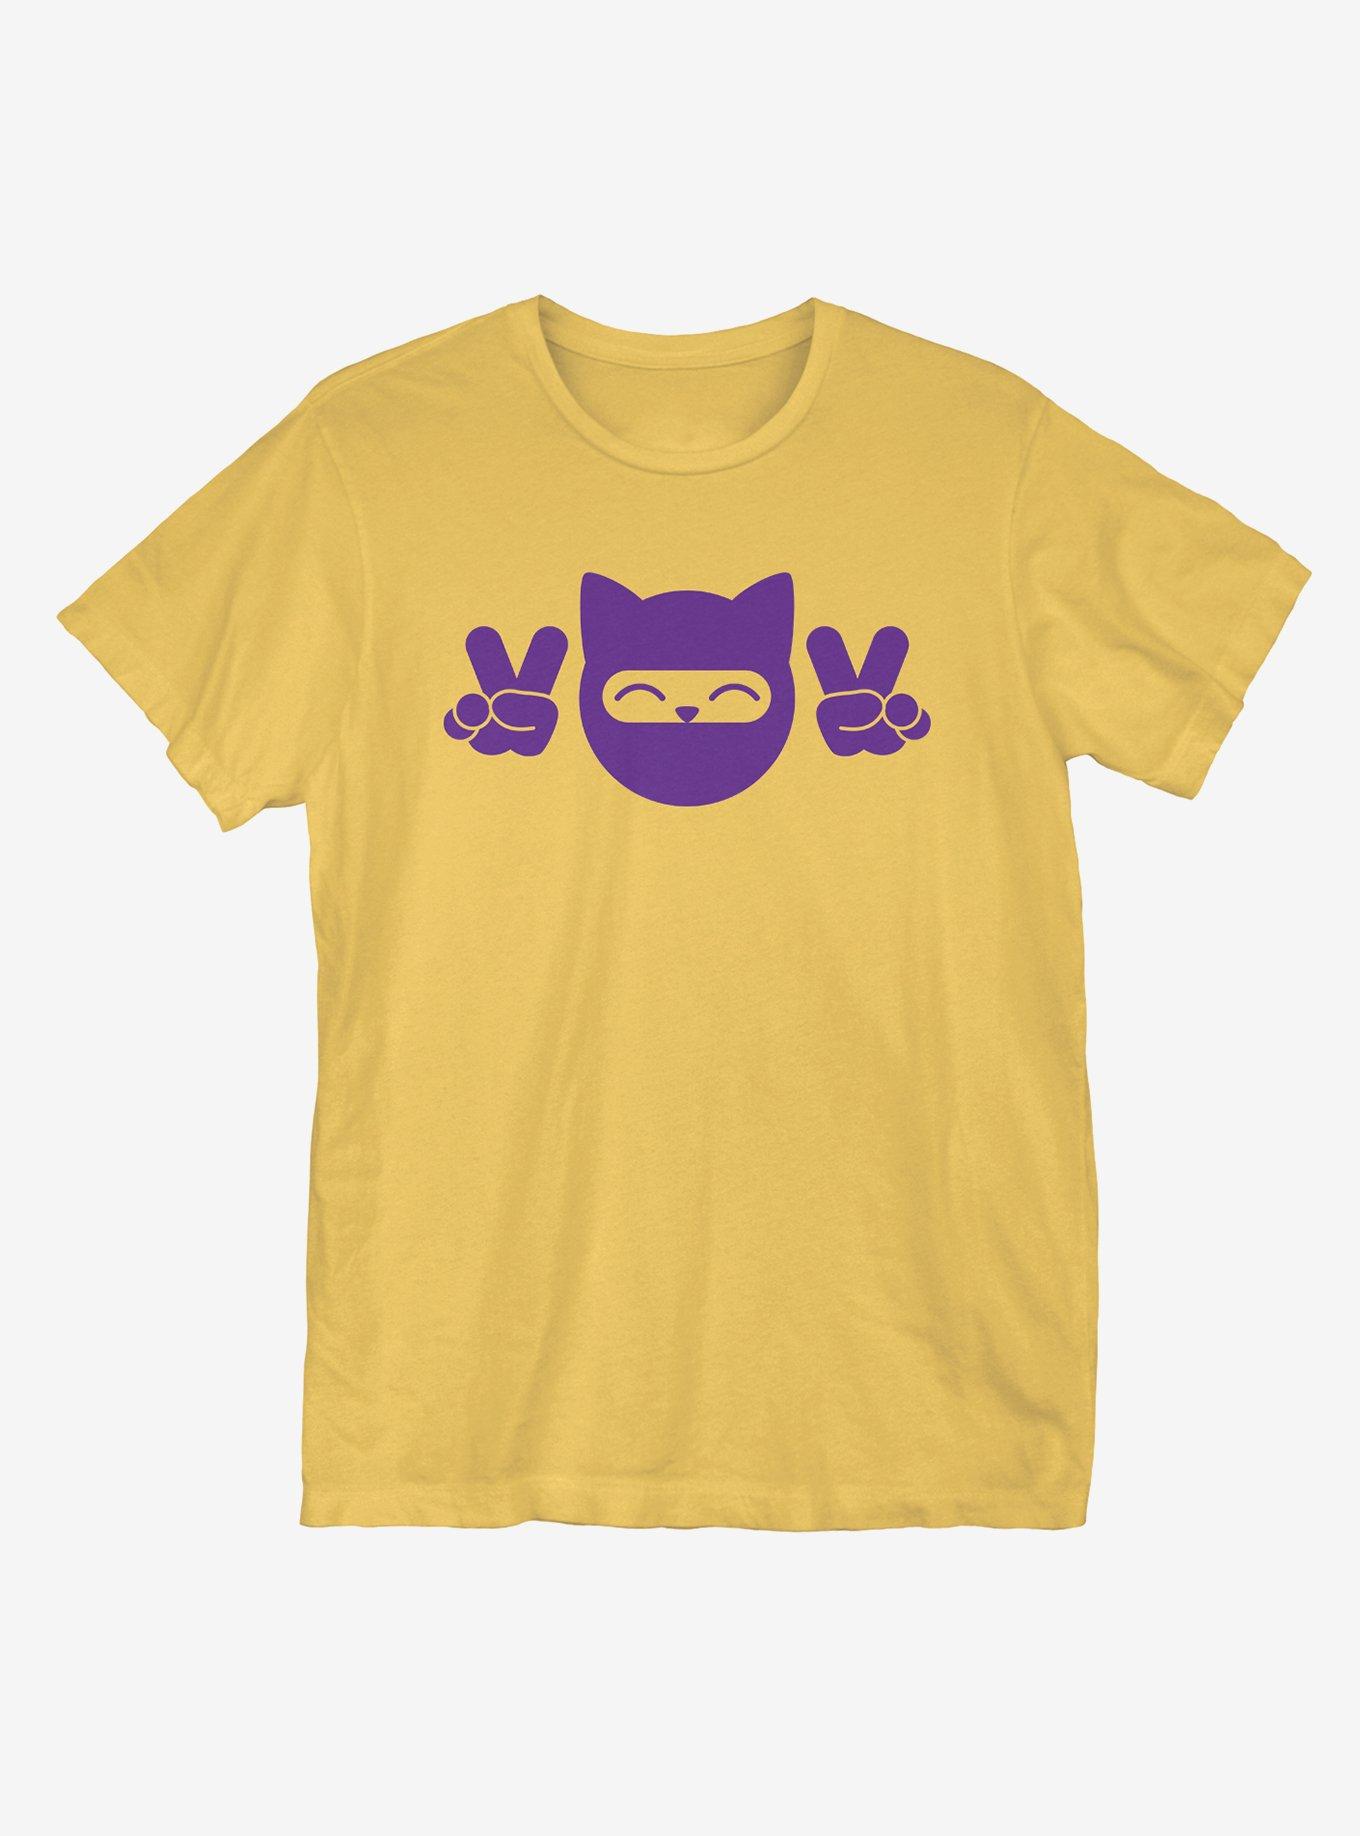 Peace Ninja Cat T-Shirt, SPRING YELLOW, hi-res